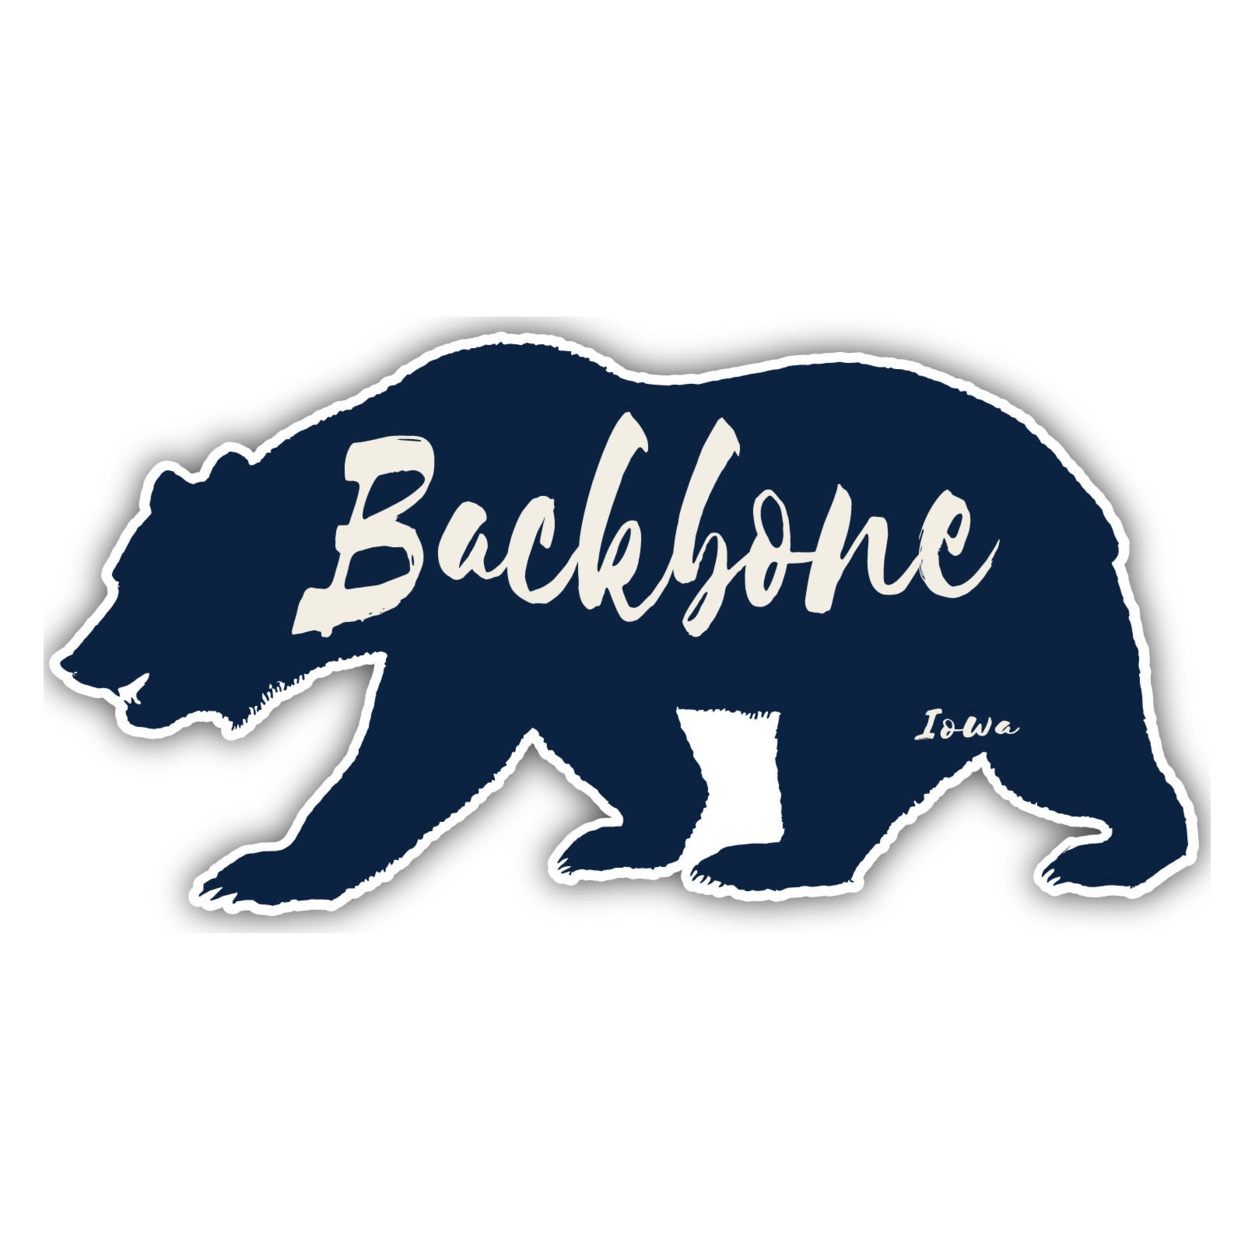 Backbone Iowa Souvenir Decorative Stickers (Choose Theme And Size) - 4-Pack, 8-Inch, Bear